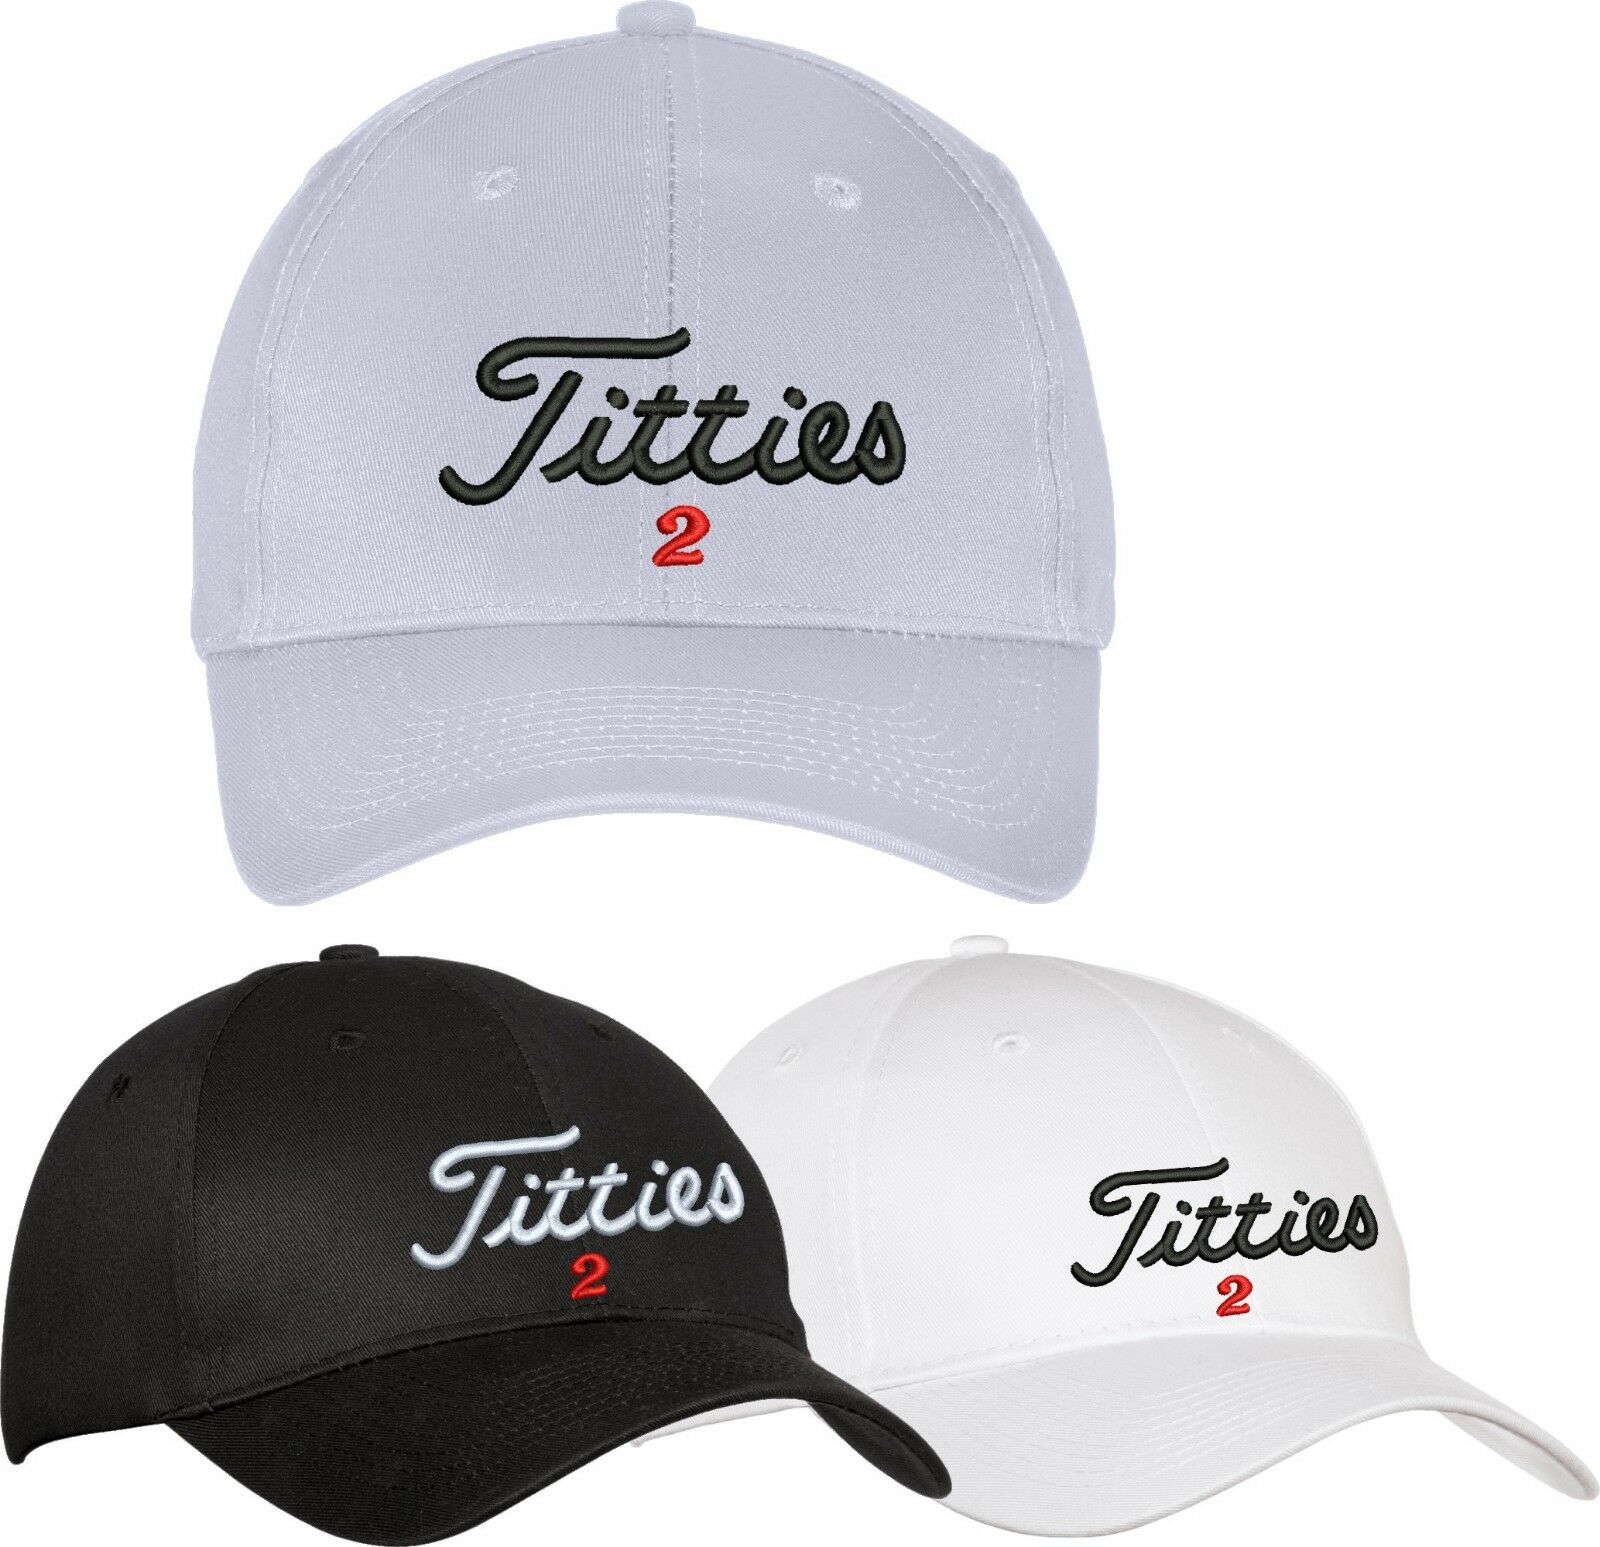 Titties Golf Hat Cap Pga Bachelor Party Gift - Adjustable